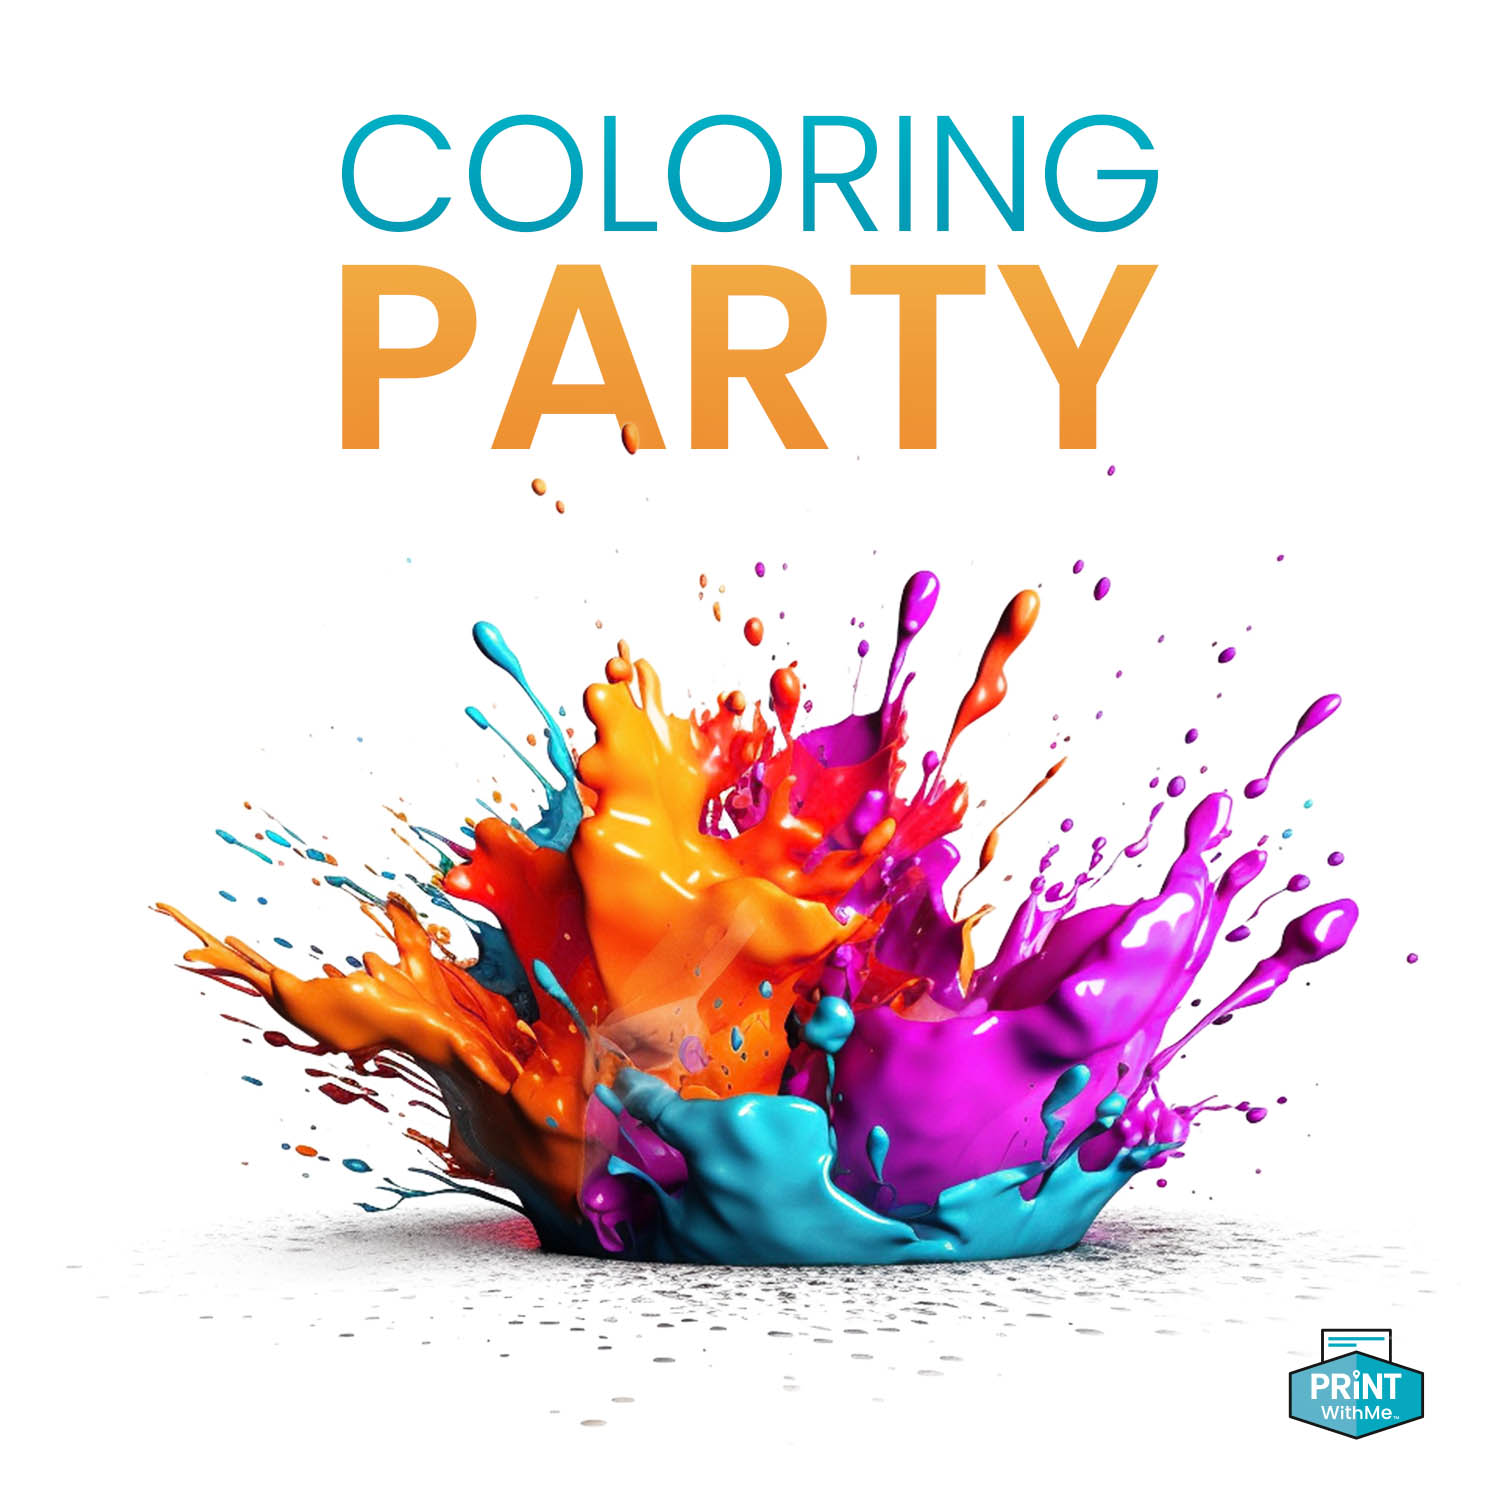 A splash a paint for a coloring party